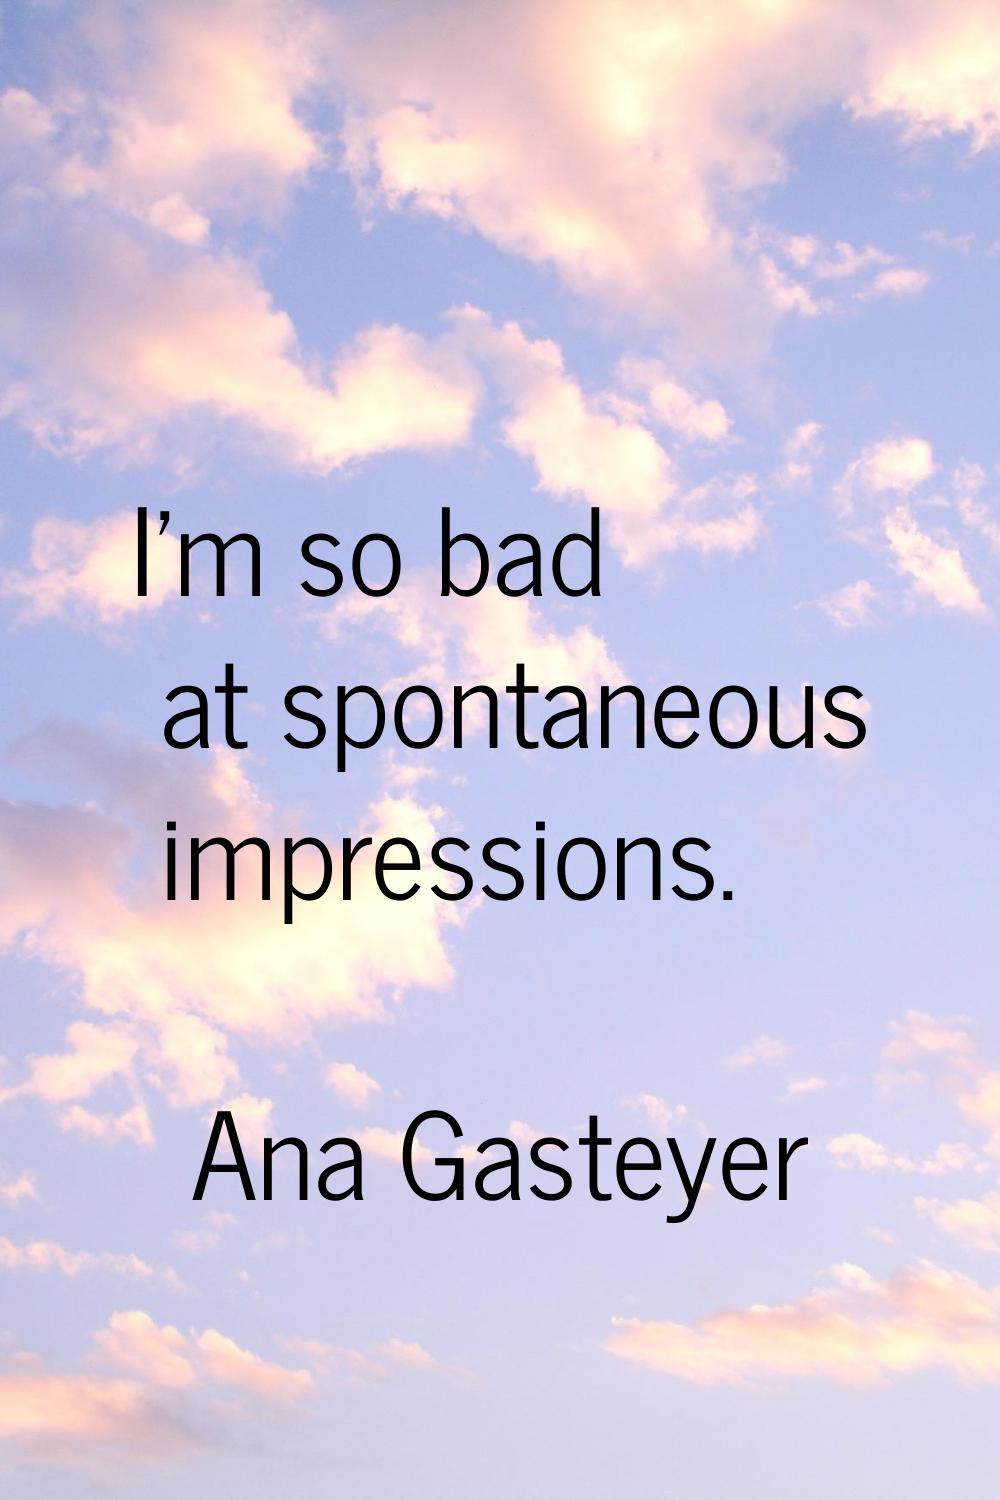 I'm so bad at spontaneous impressions.